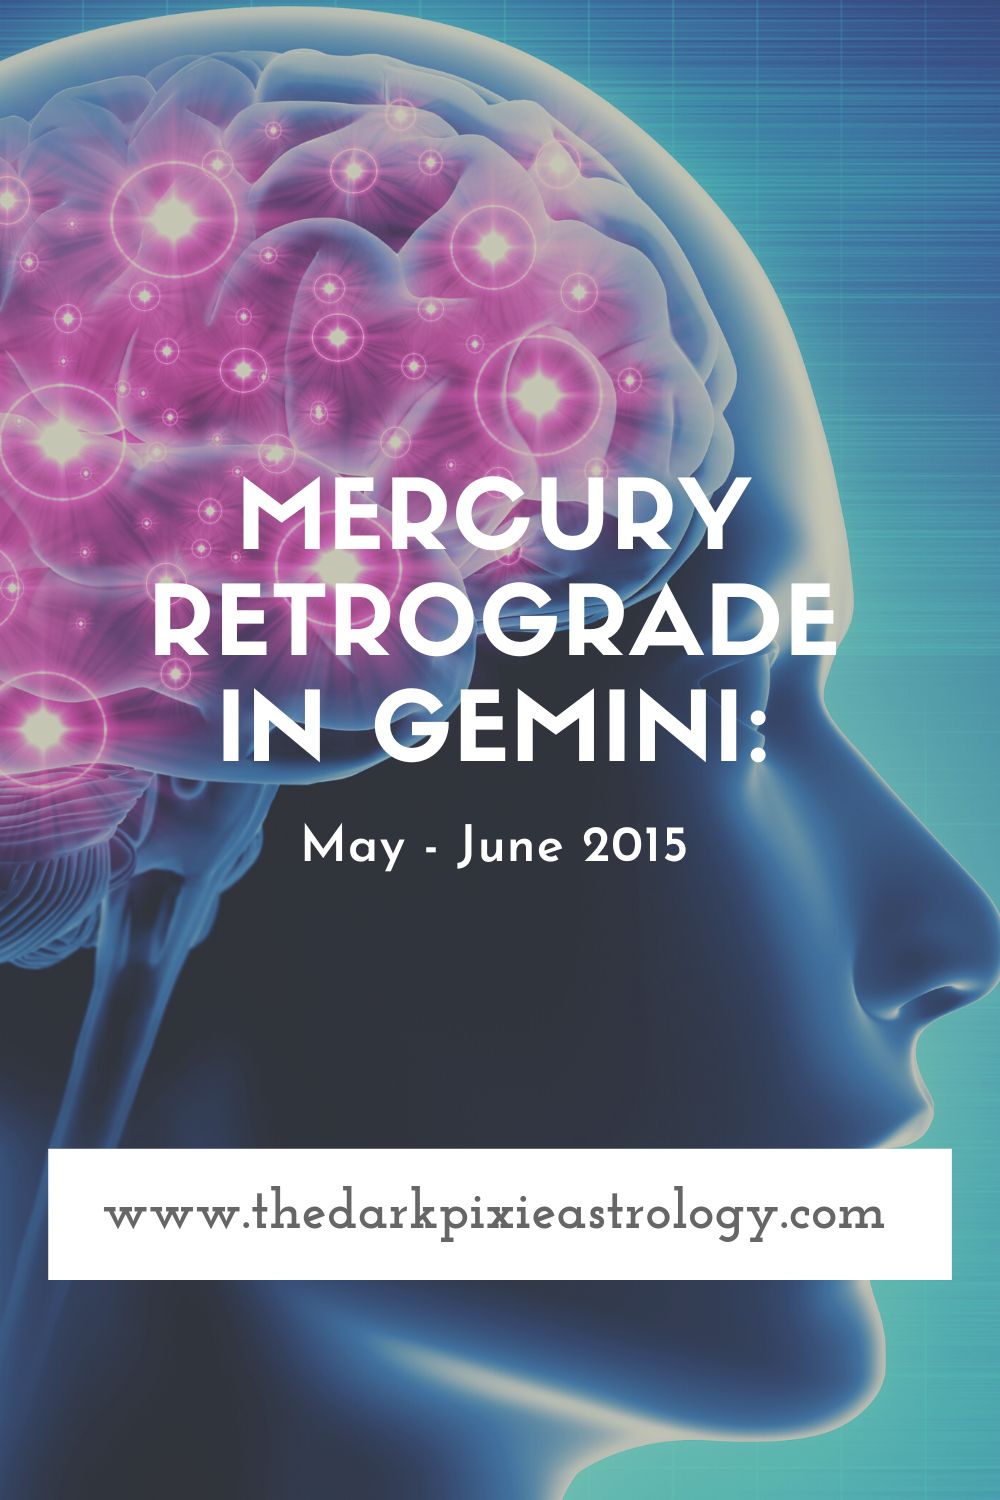 Mercury Retrograde in Gemini: May - June 2015 - The Dark Pixie Astrology